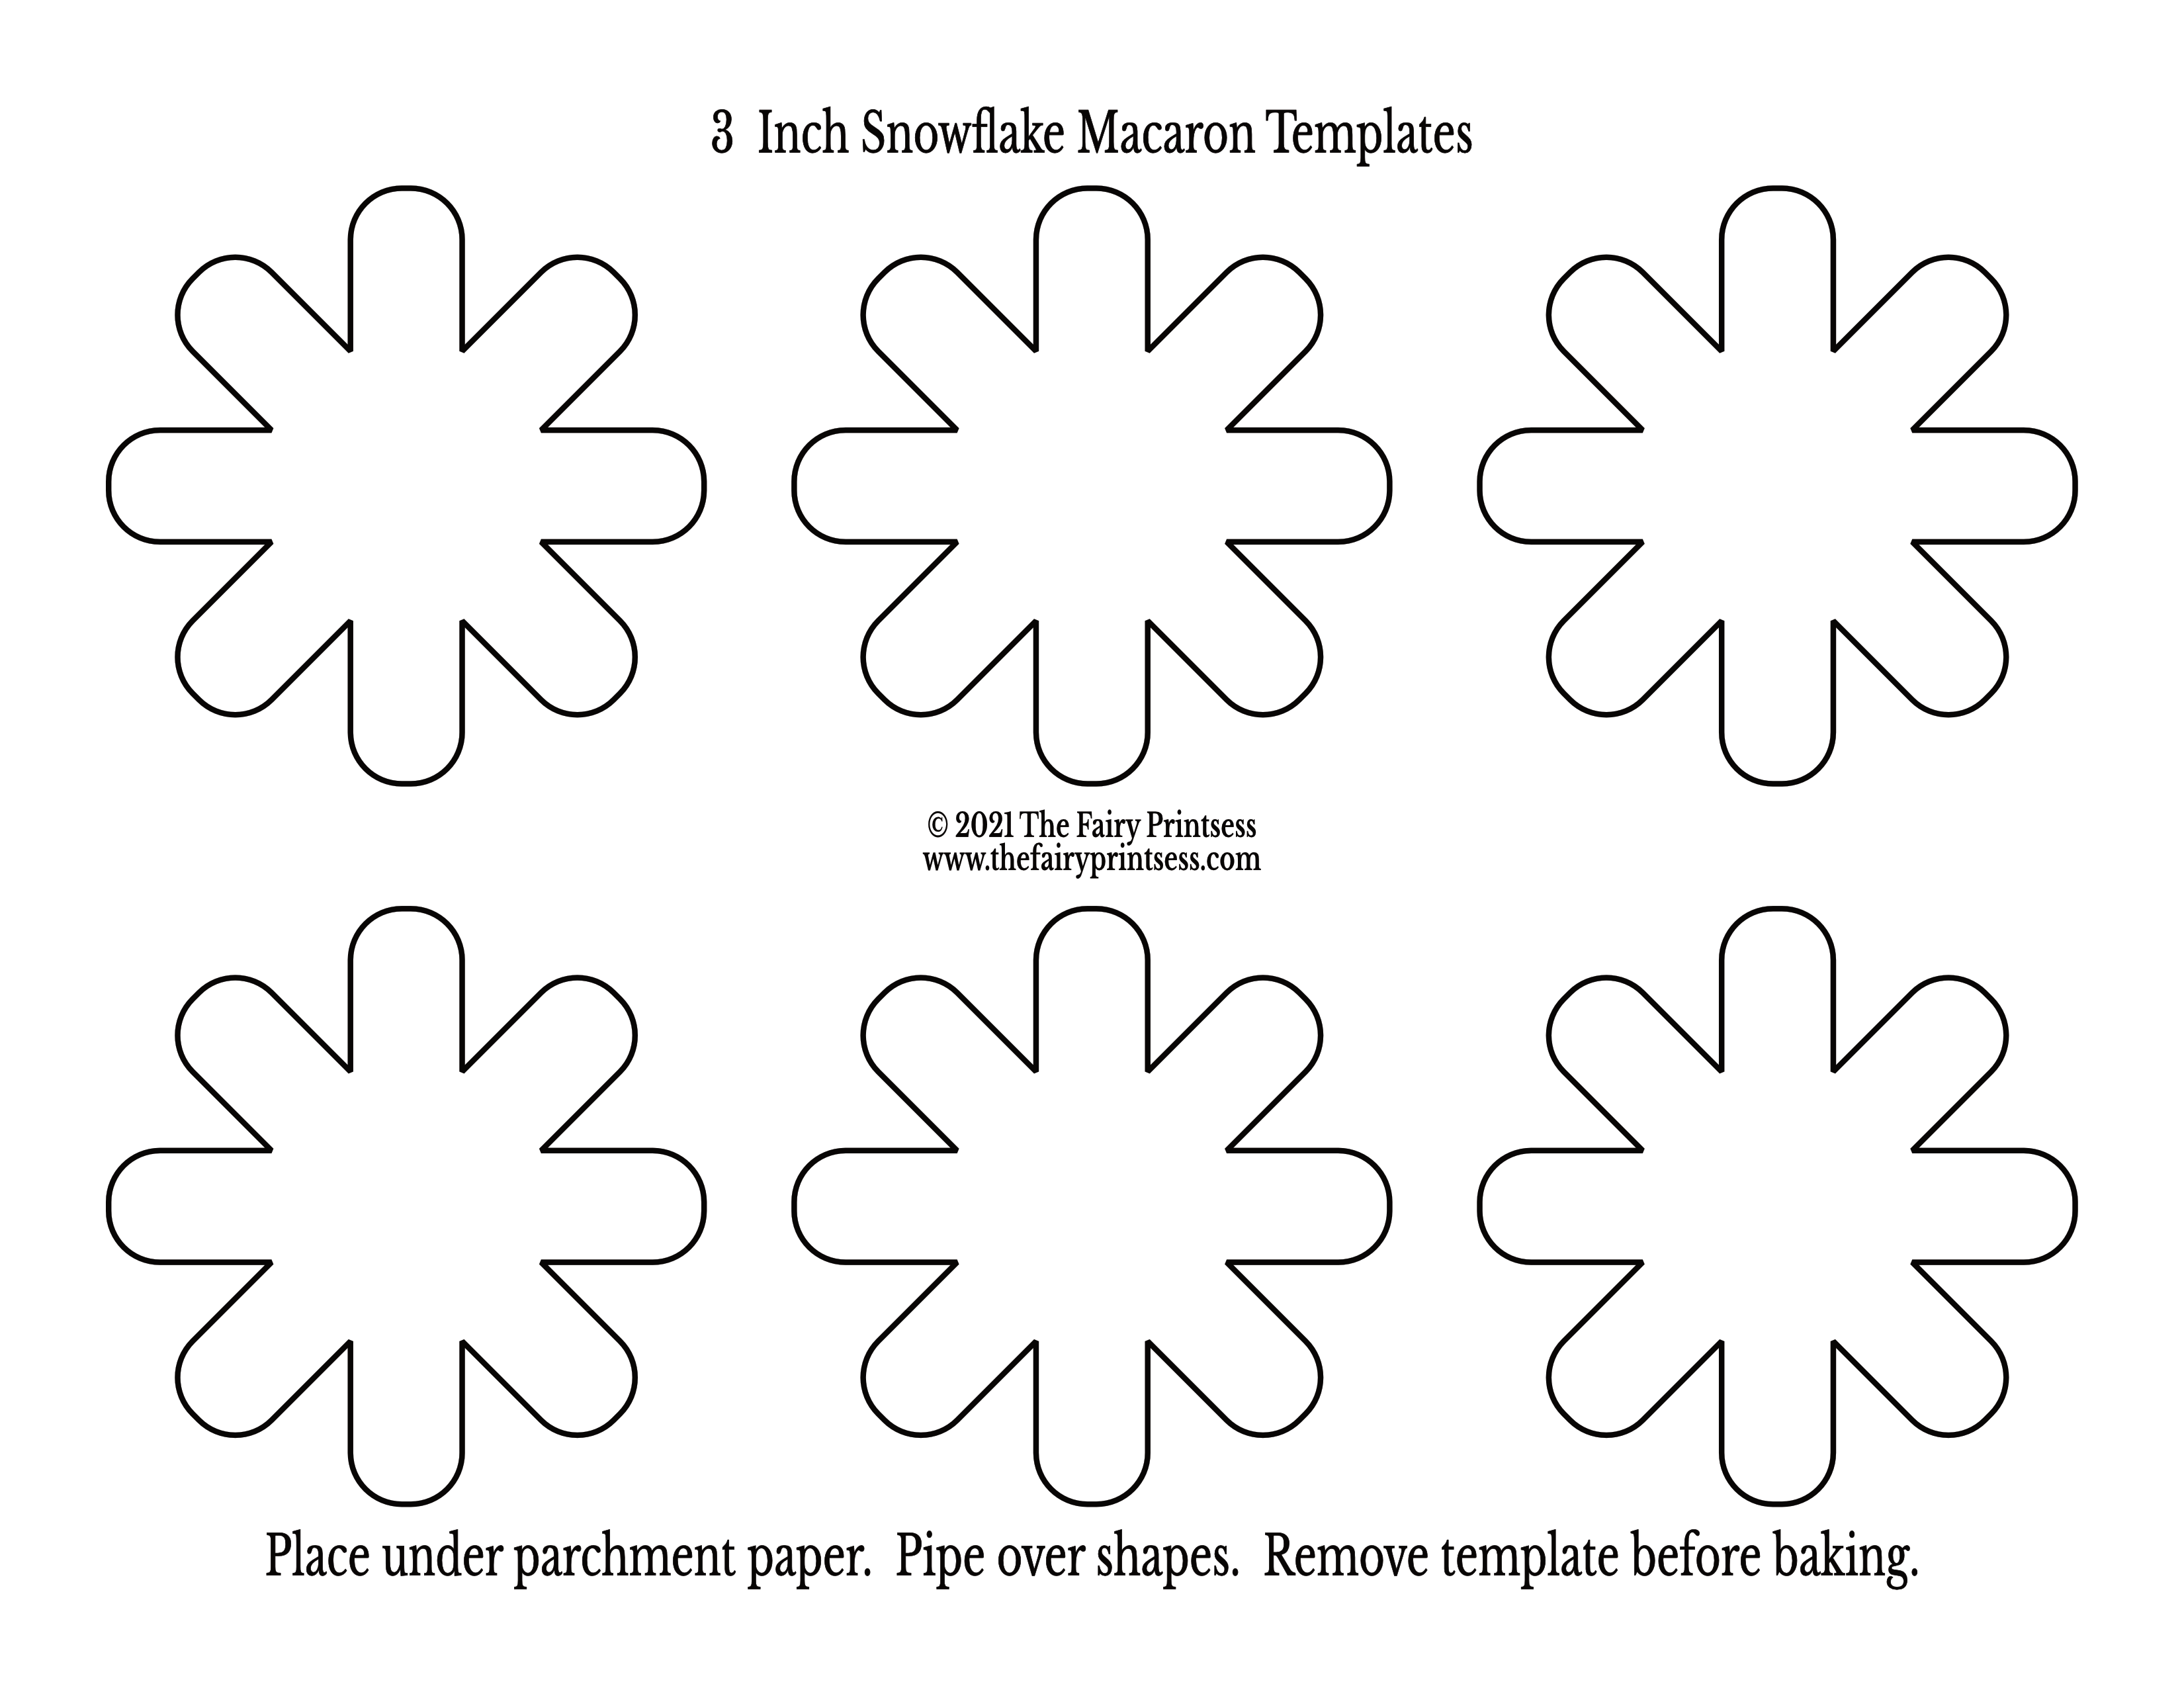 3 inch snowflake macaron template free printable